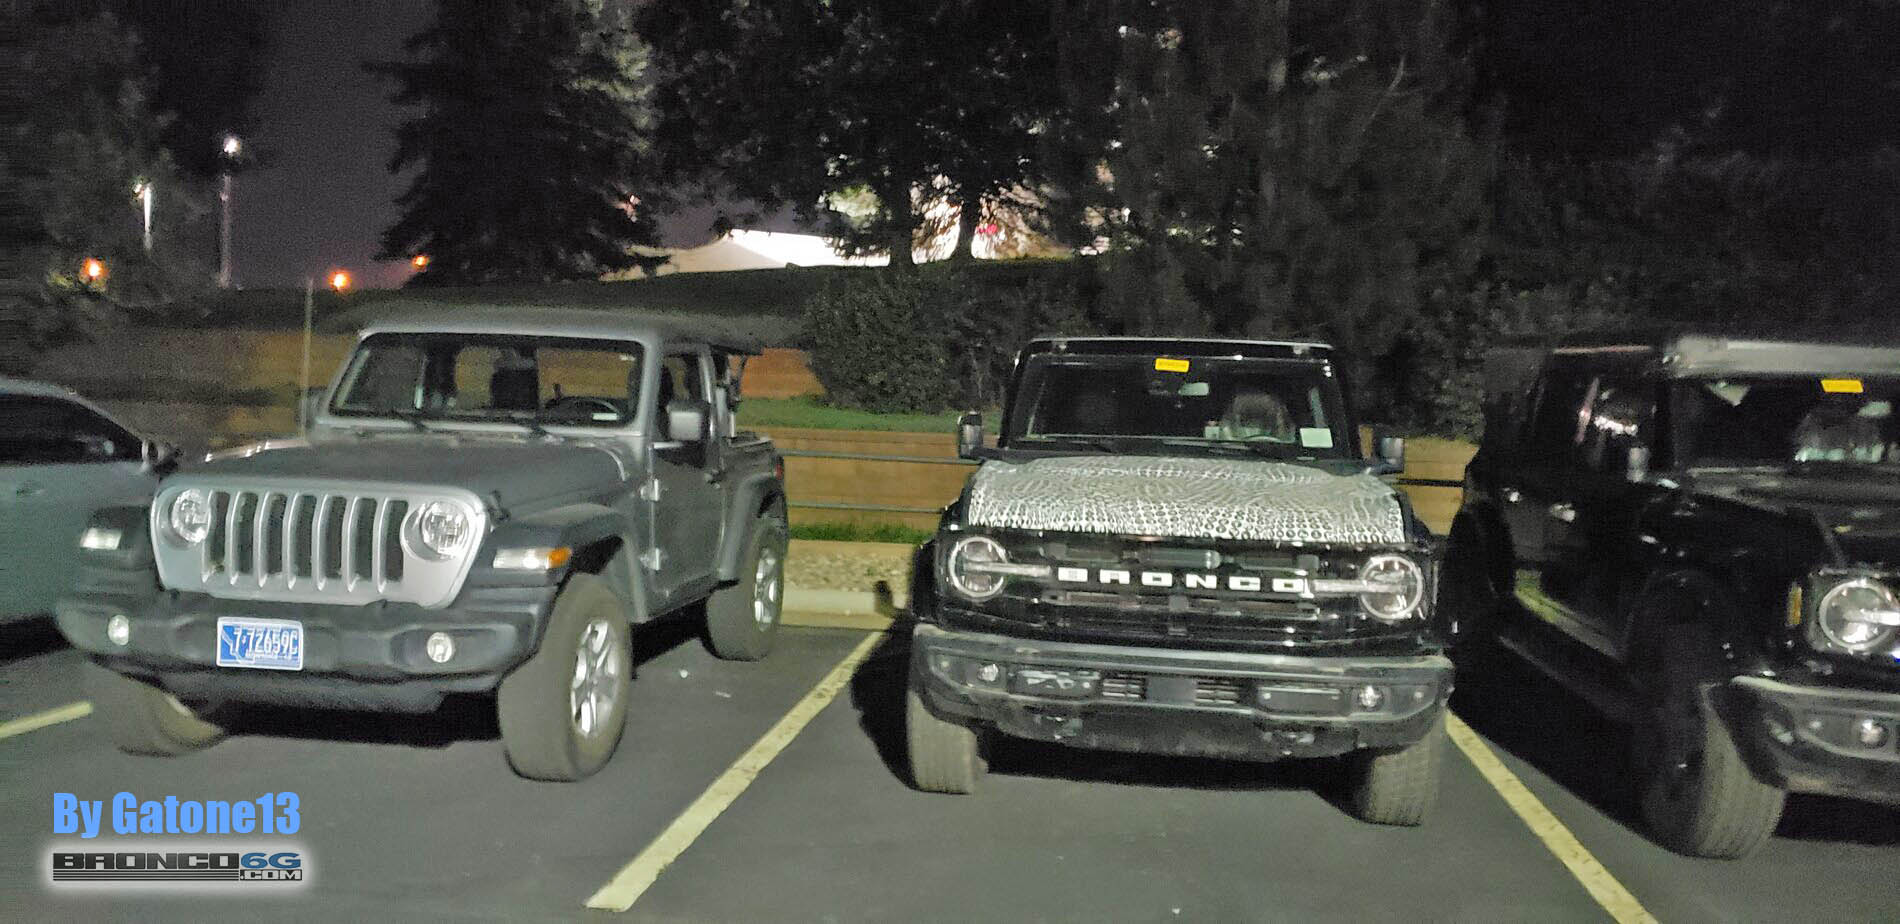 Ford Bronco vs Jeep Wrangler side by side comparison 4.jpg